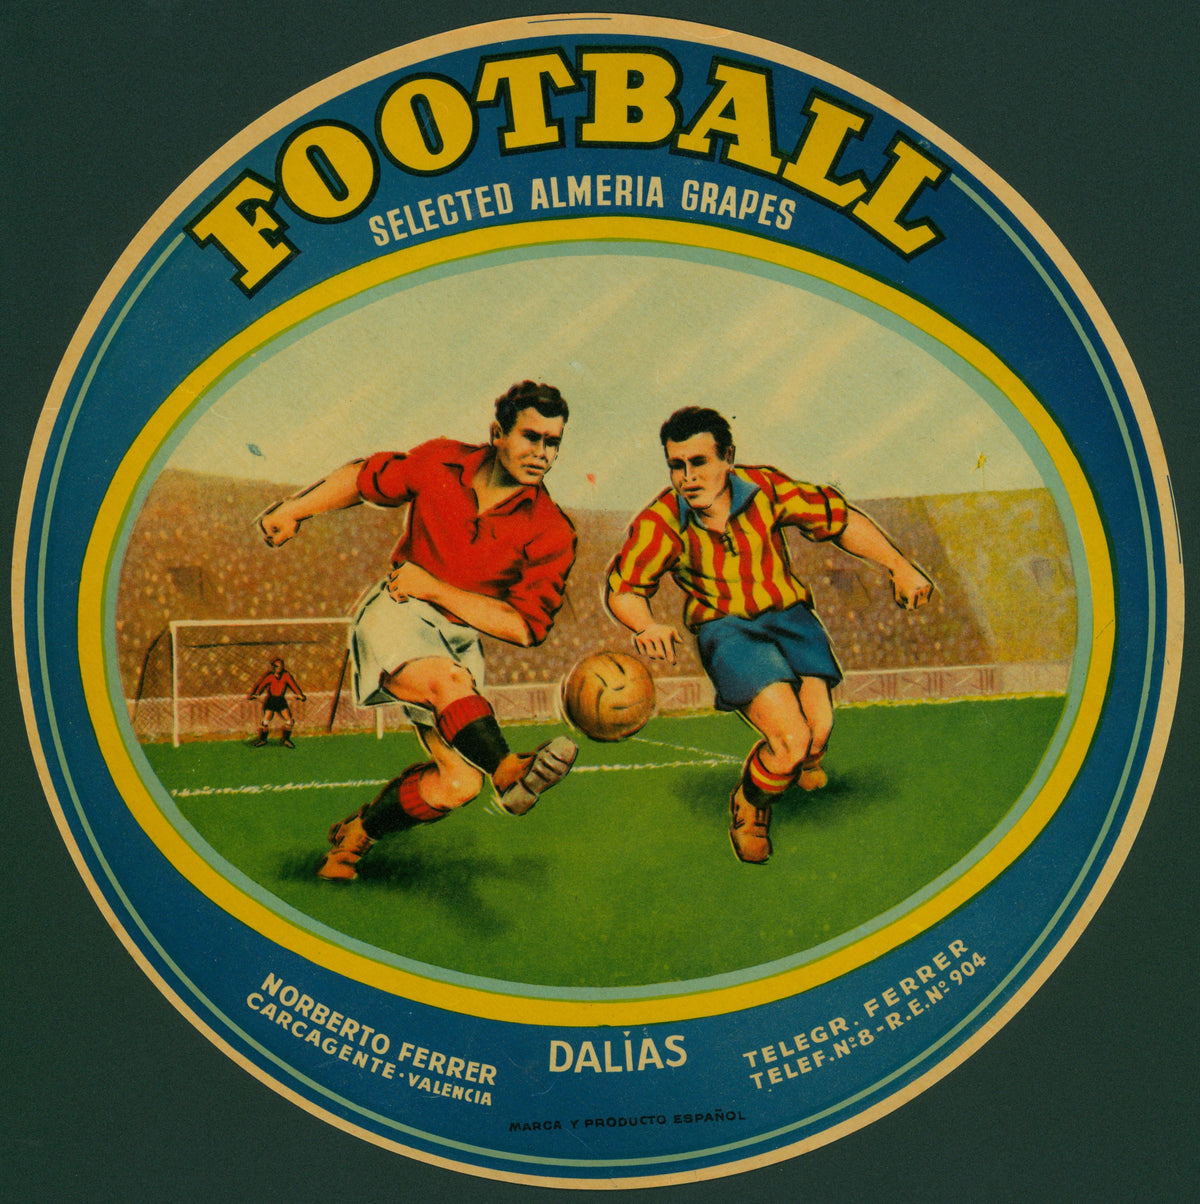 Football- Spanish Crate Label - Authentic Vintage Antique Print